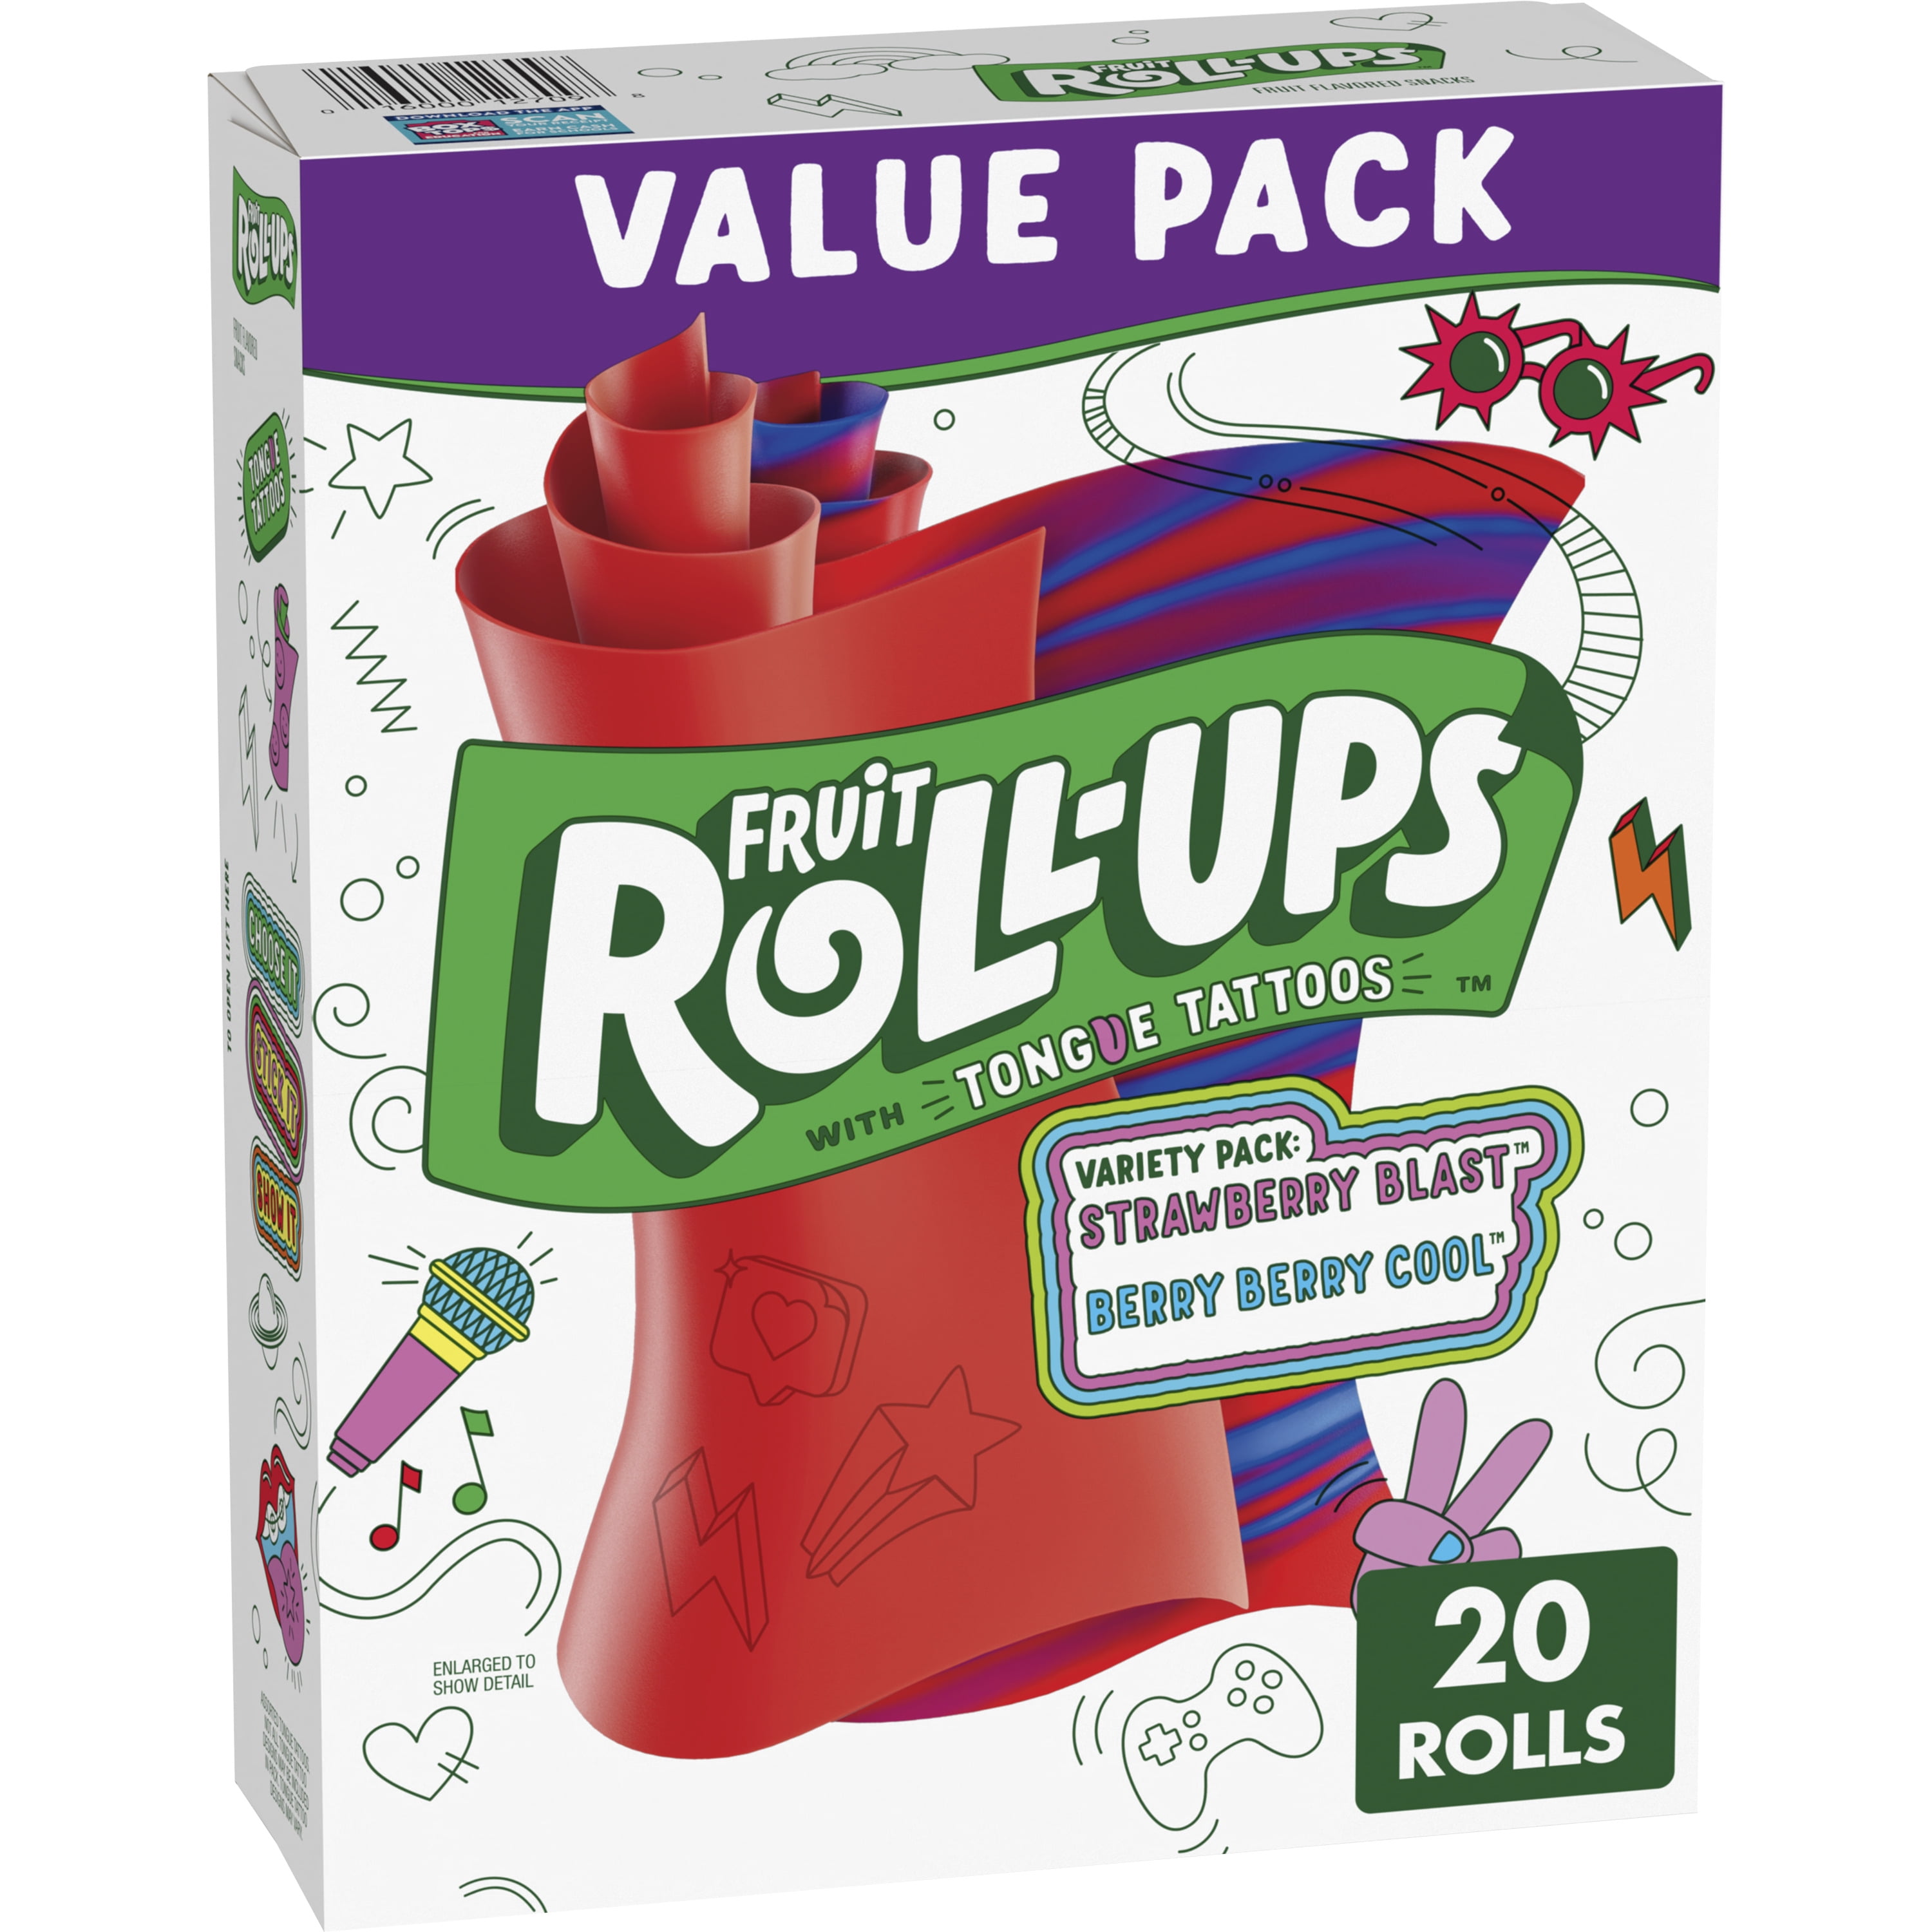 Fruit Roll-Ups Fruit Flavored Snacks, Variety Value Pack, 0.5 oz, 20